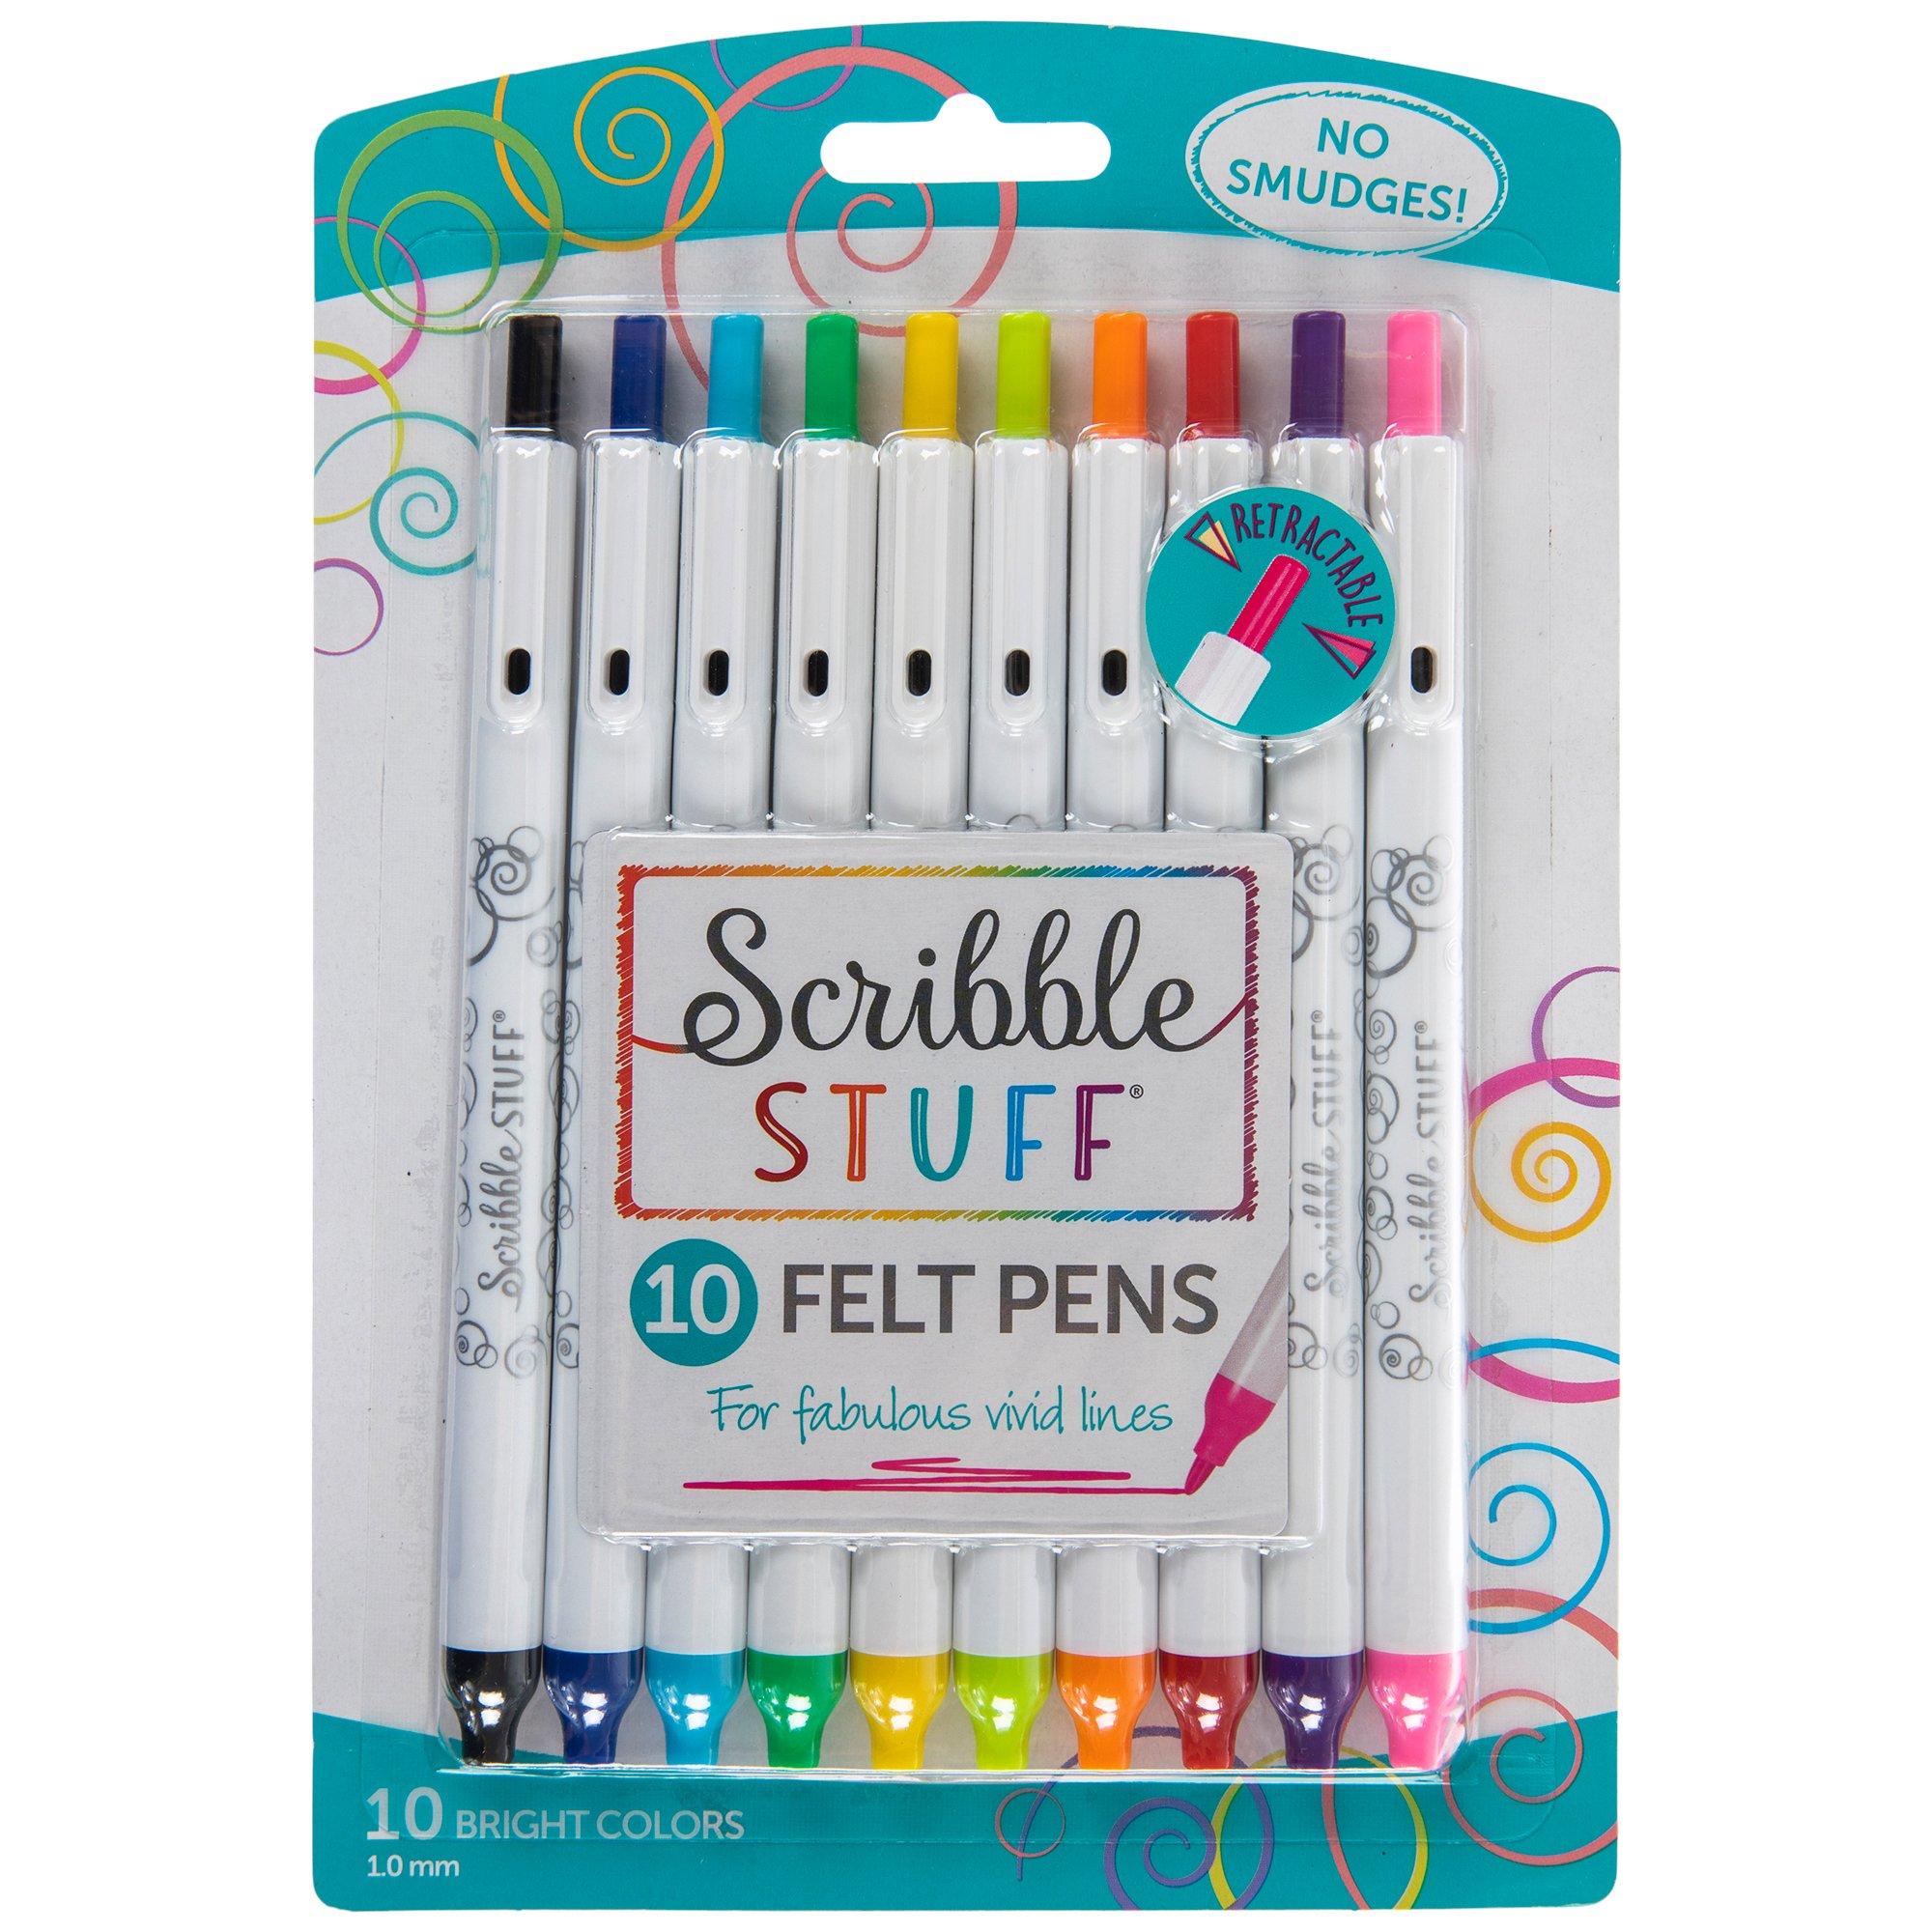 Marabu Fineliner Color Pens - 12 Piece Set, Hobby Lobby